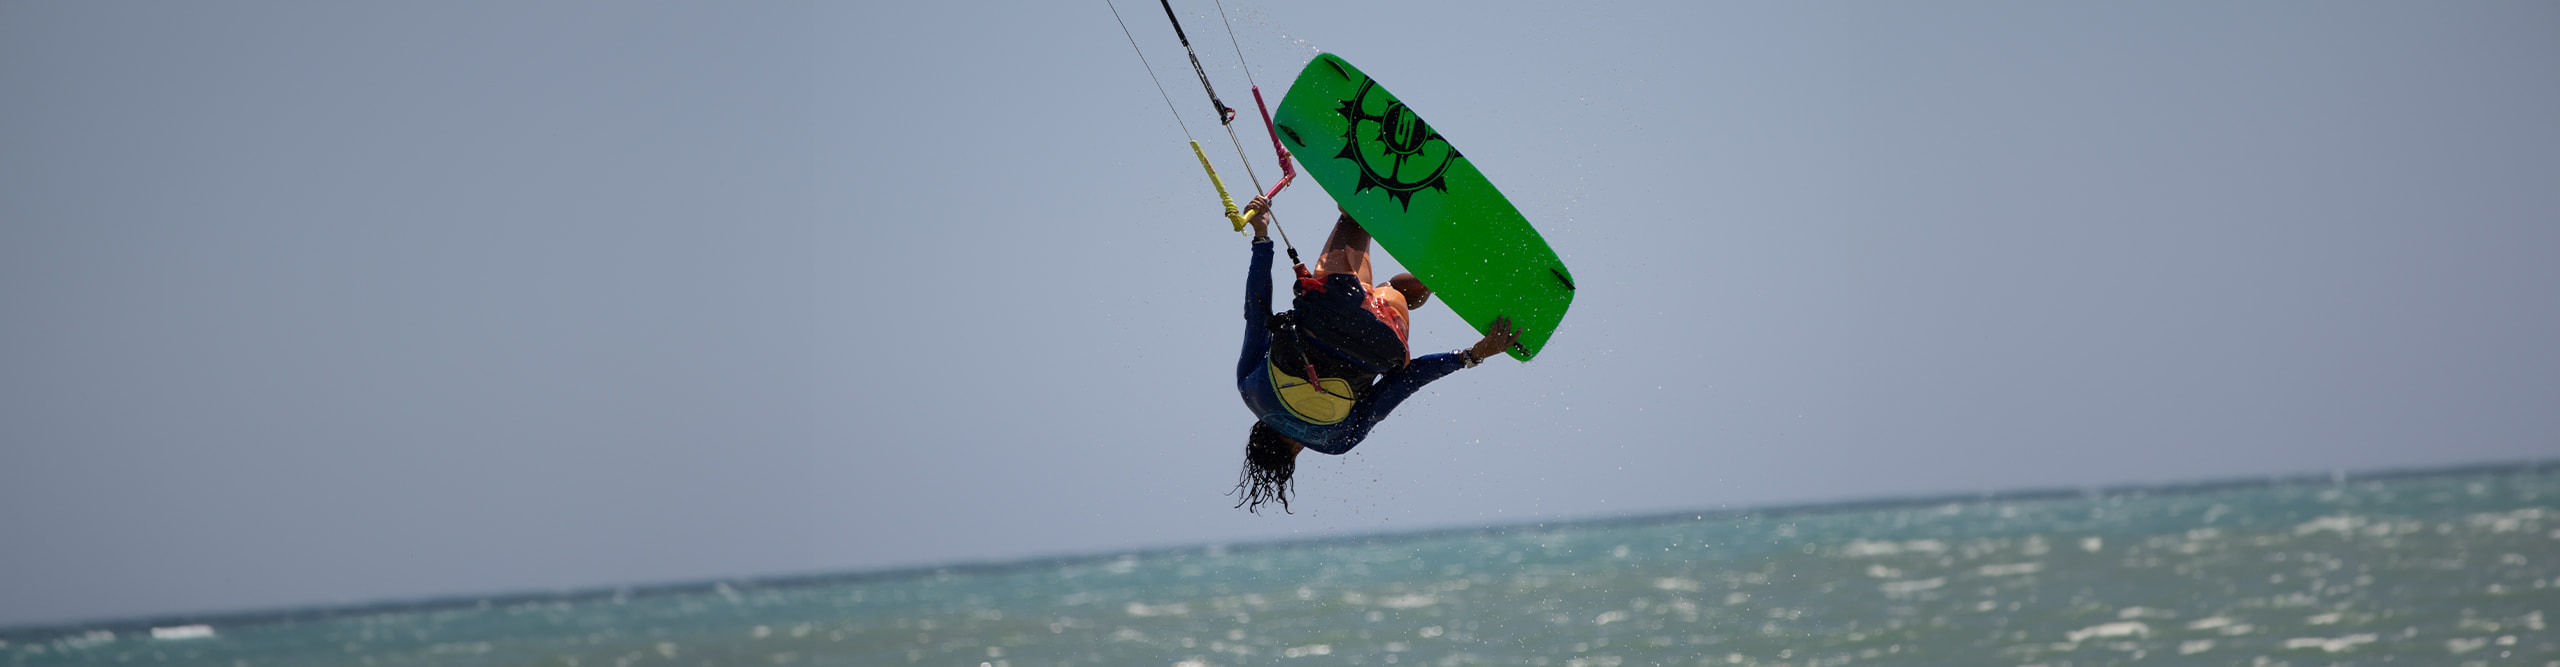 corsi di kitesurf gela sicilia